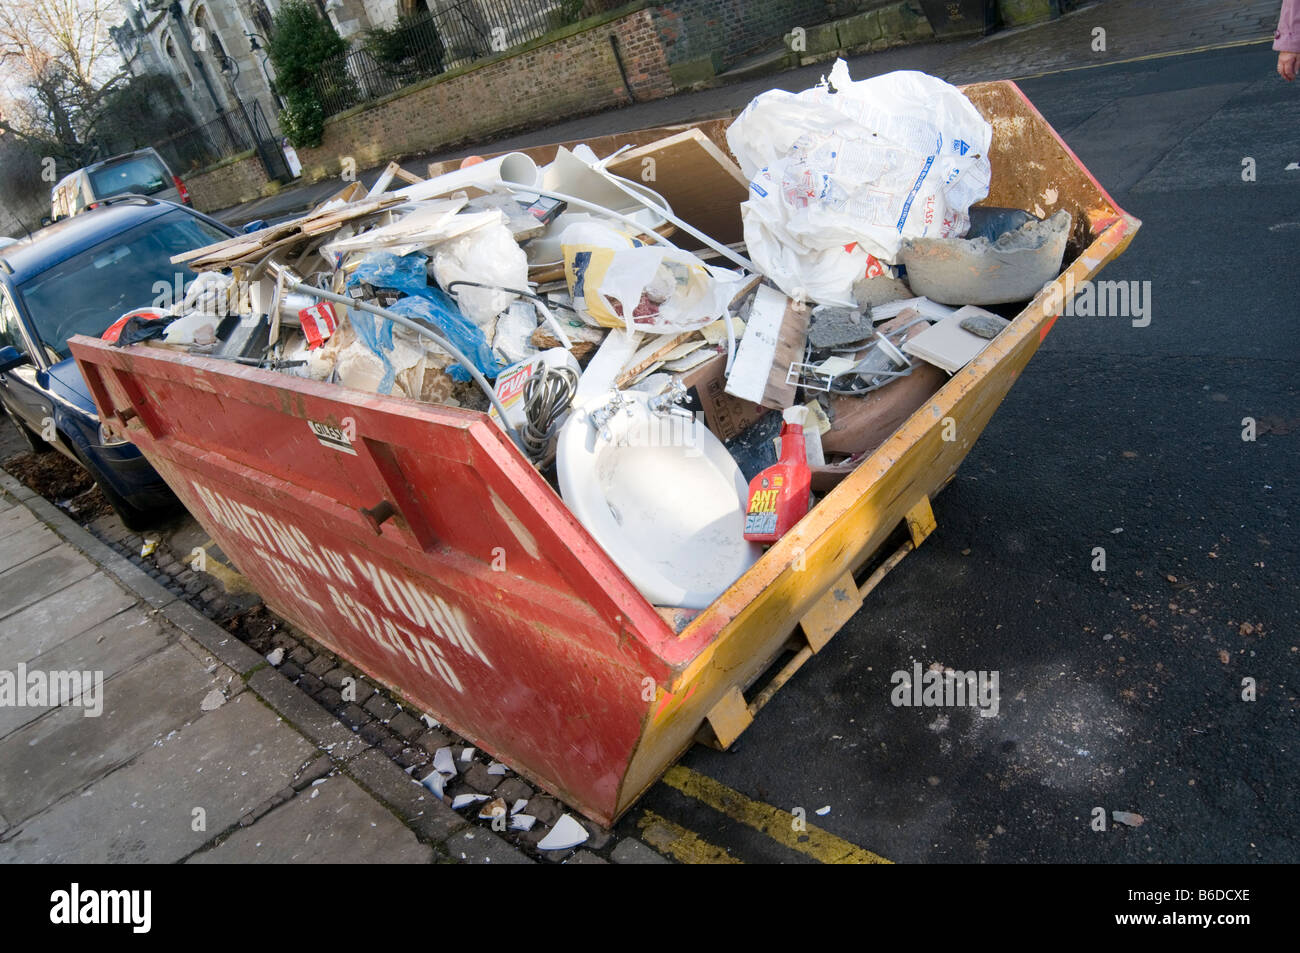 skip trash rubbish junk scrap throwaway dumpster can waste dispose disposal dump refuse disposal bin landfill uk tax Stock Photo